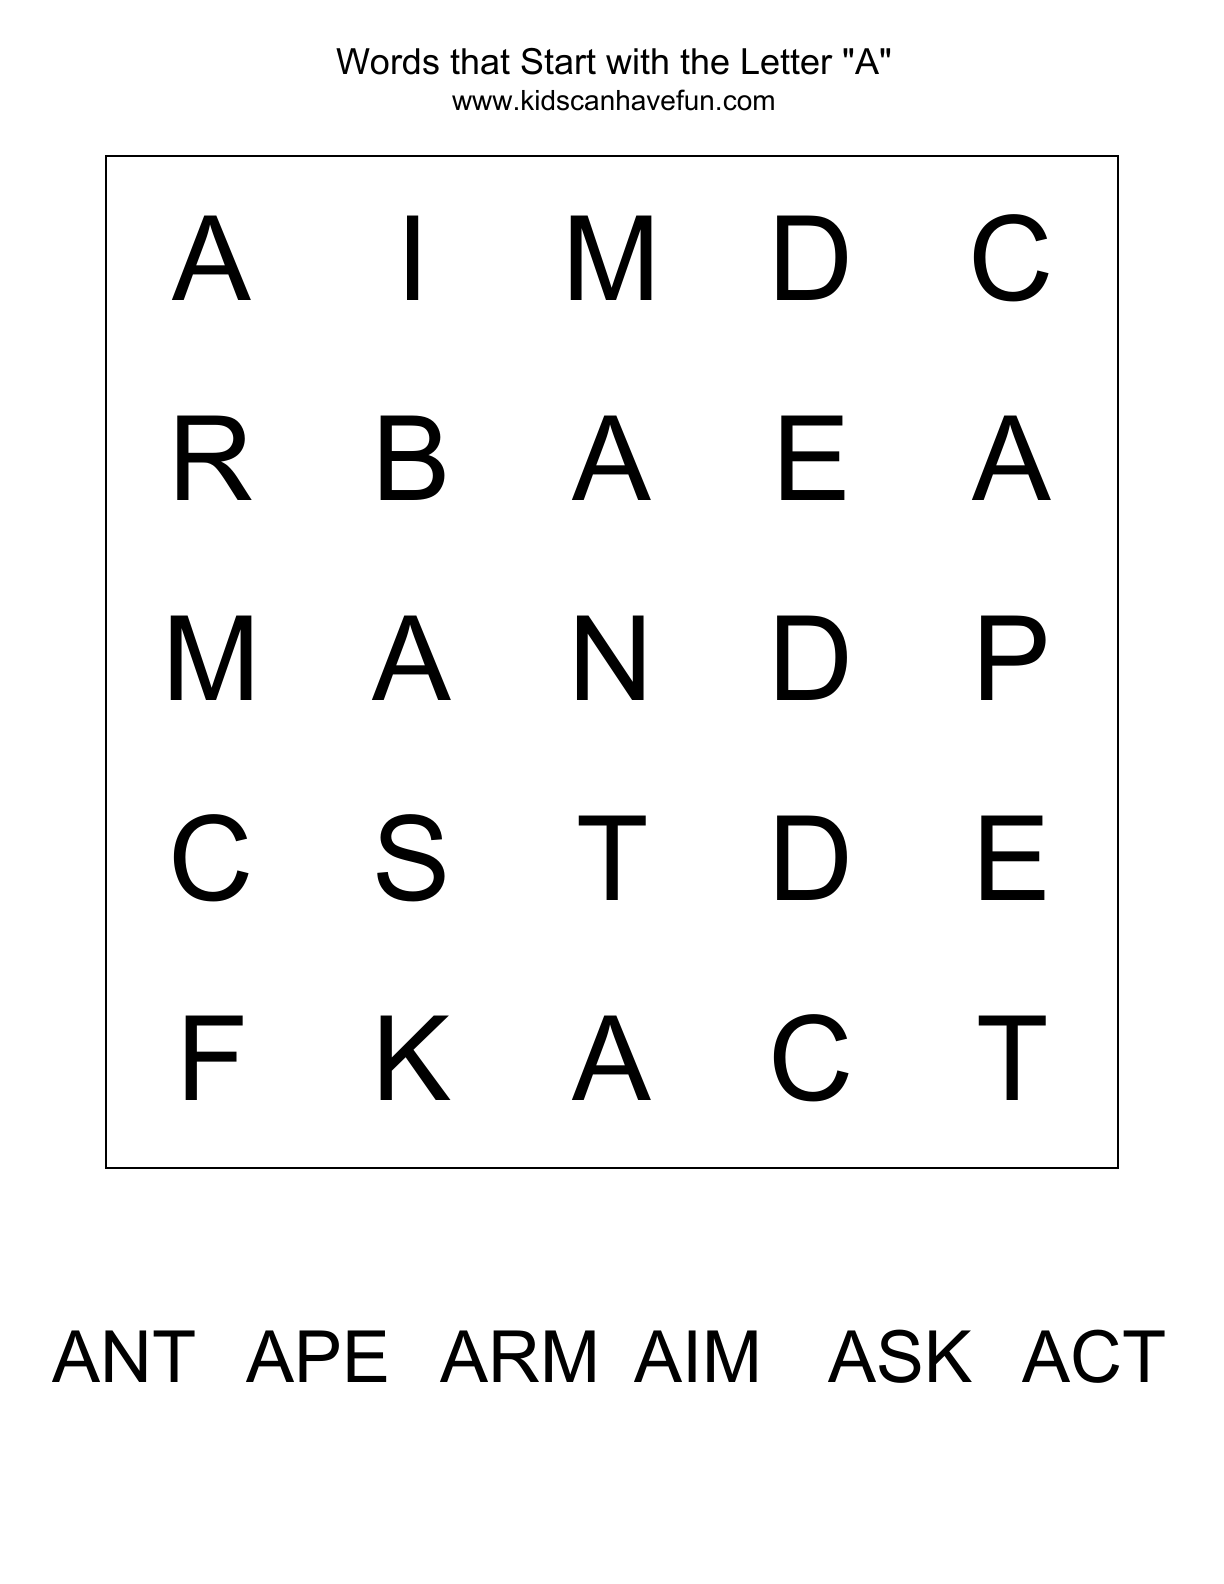 10-alphabet-word-search-worksheets-worksheeto